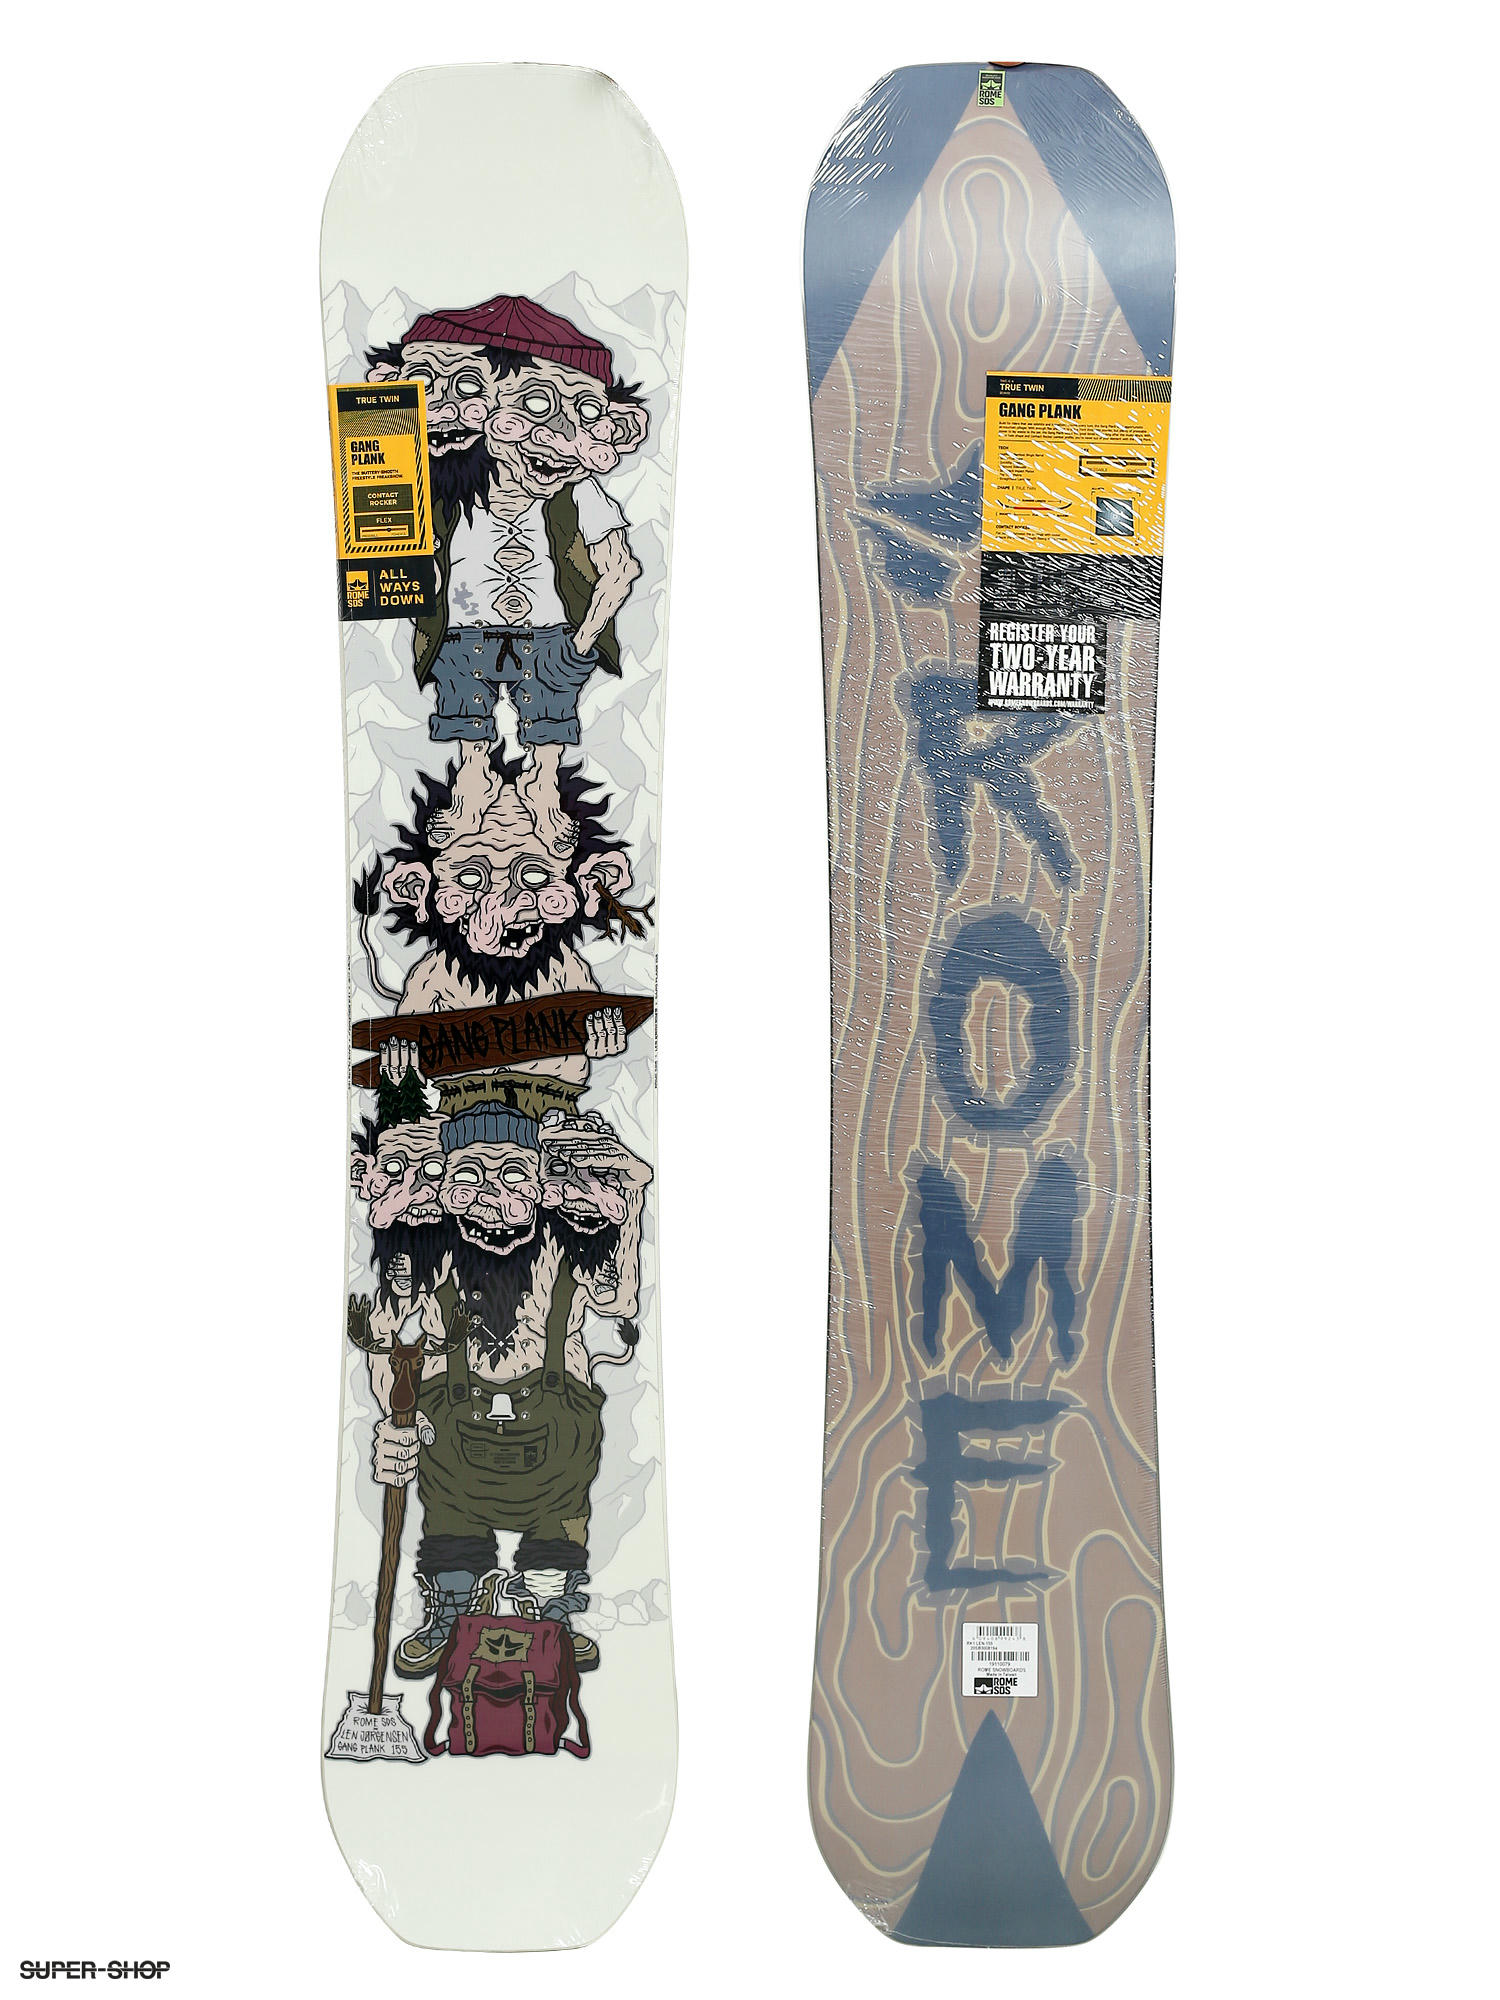 https://static.super-shop.com/1101155-rome-lens-rk1-gang-plank-snowboard-multi.jpg?w=1920